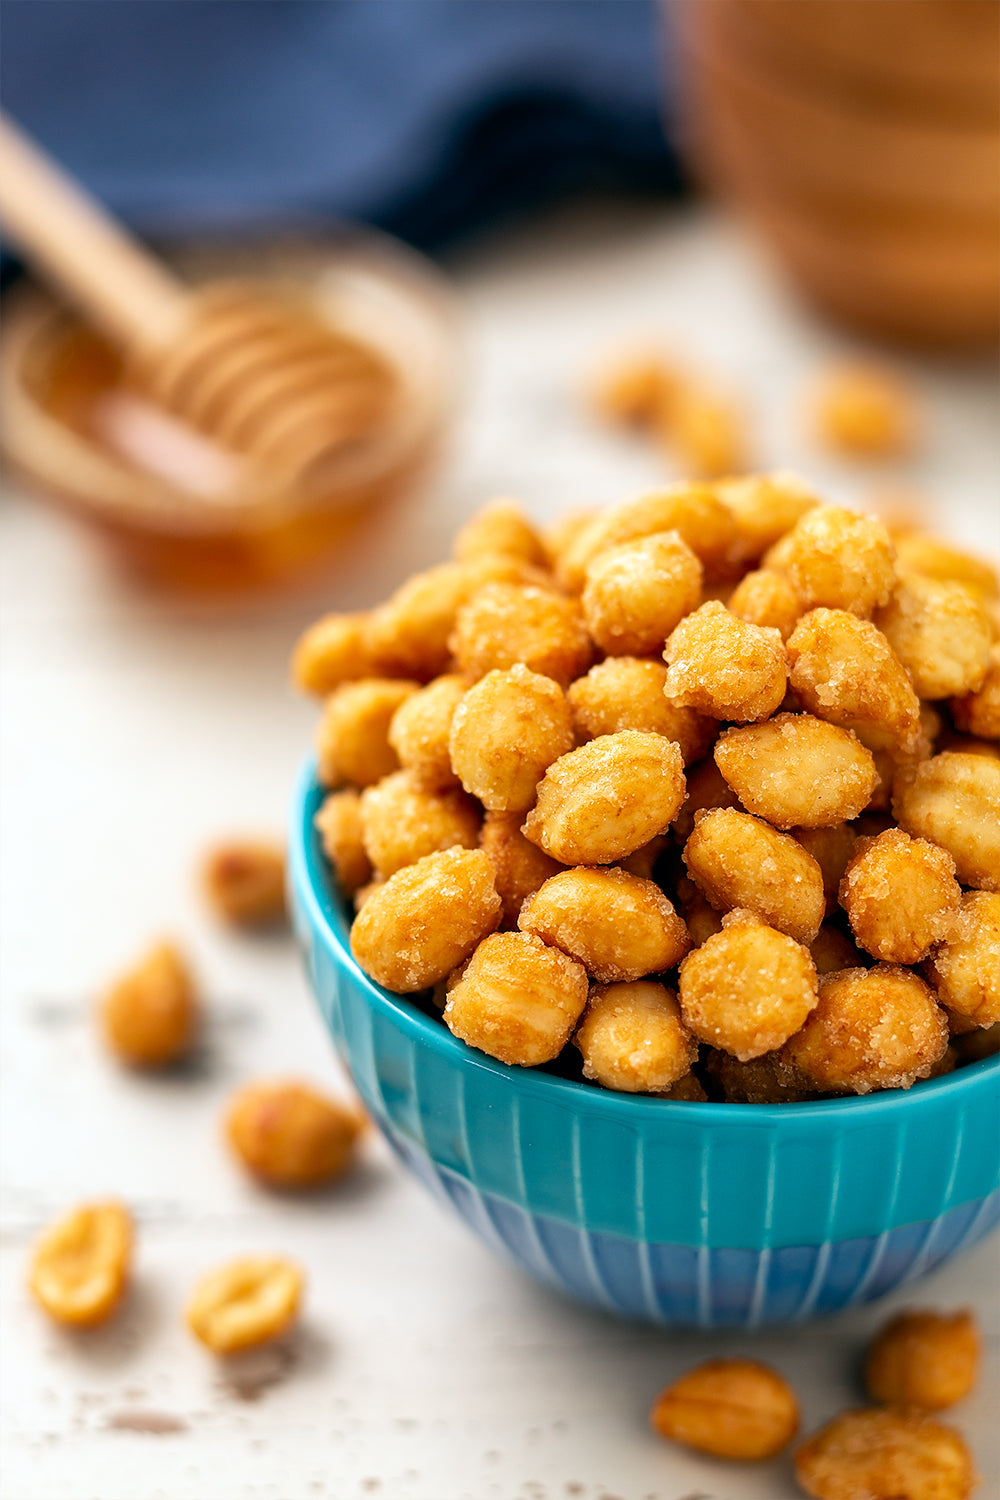 Honey Roasted Chipotle Peanuts